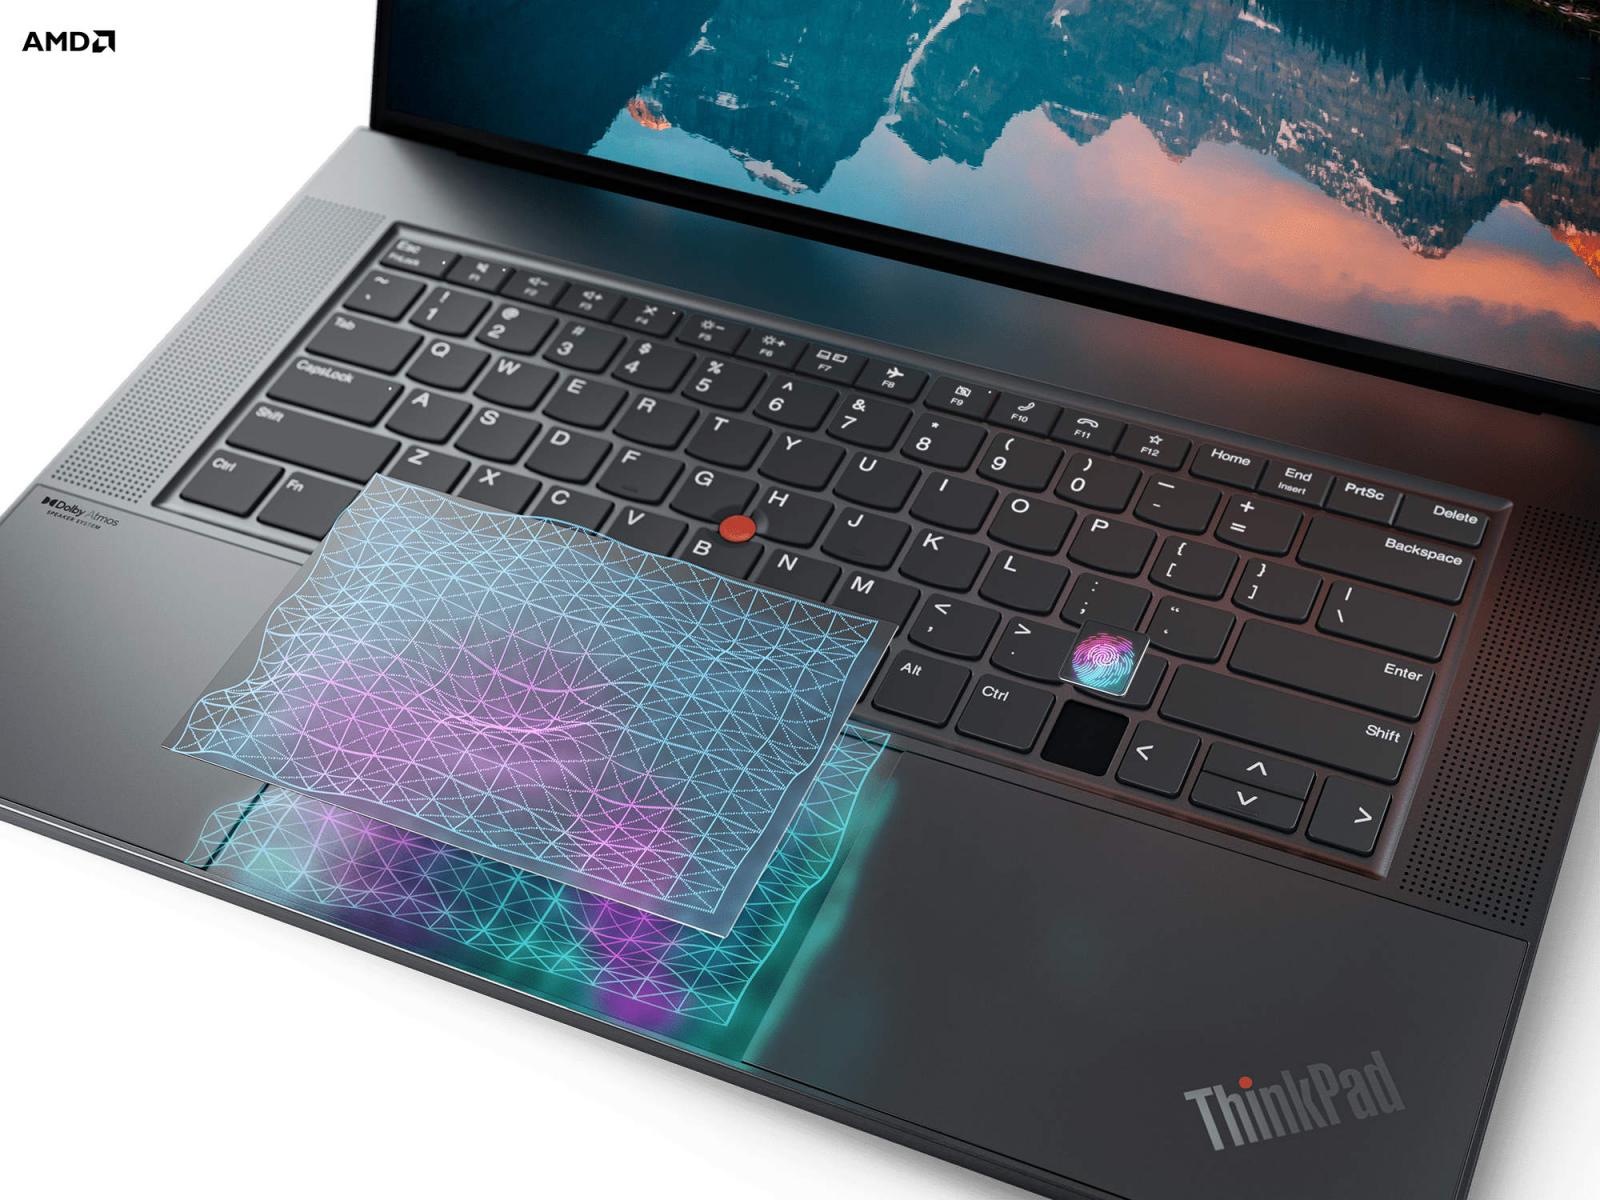 ThinkPad Z series Microsoft Pluton 